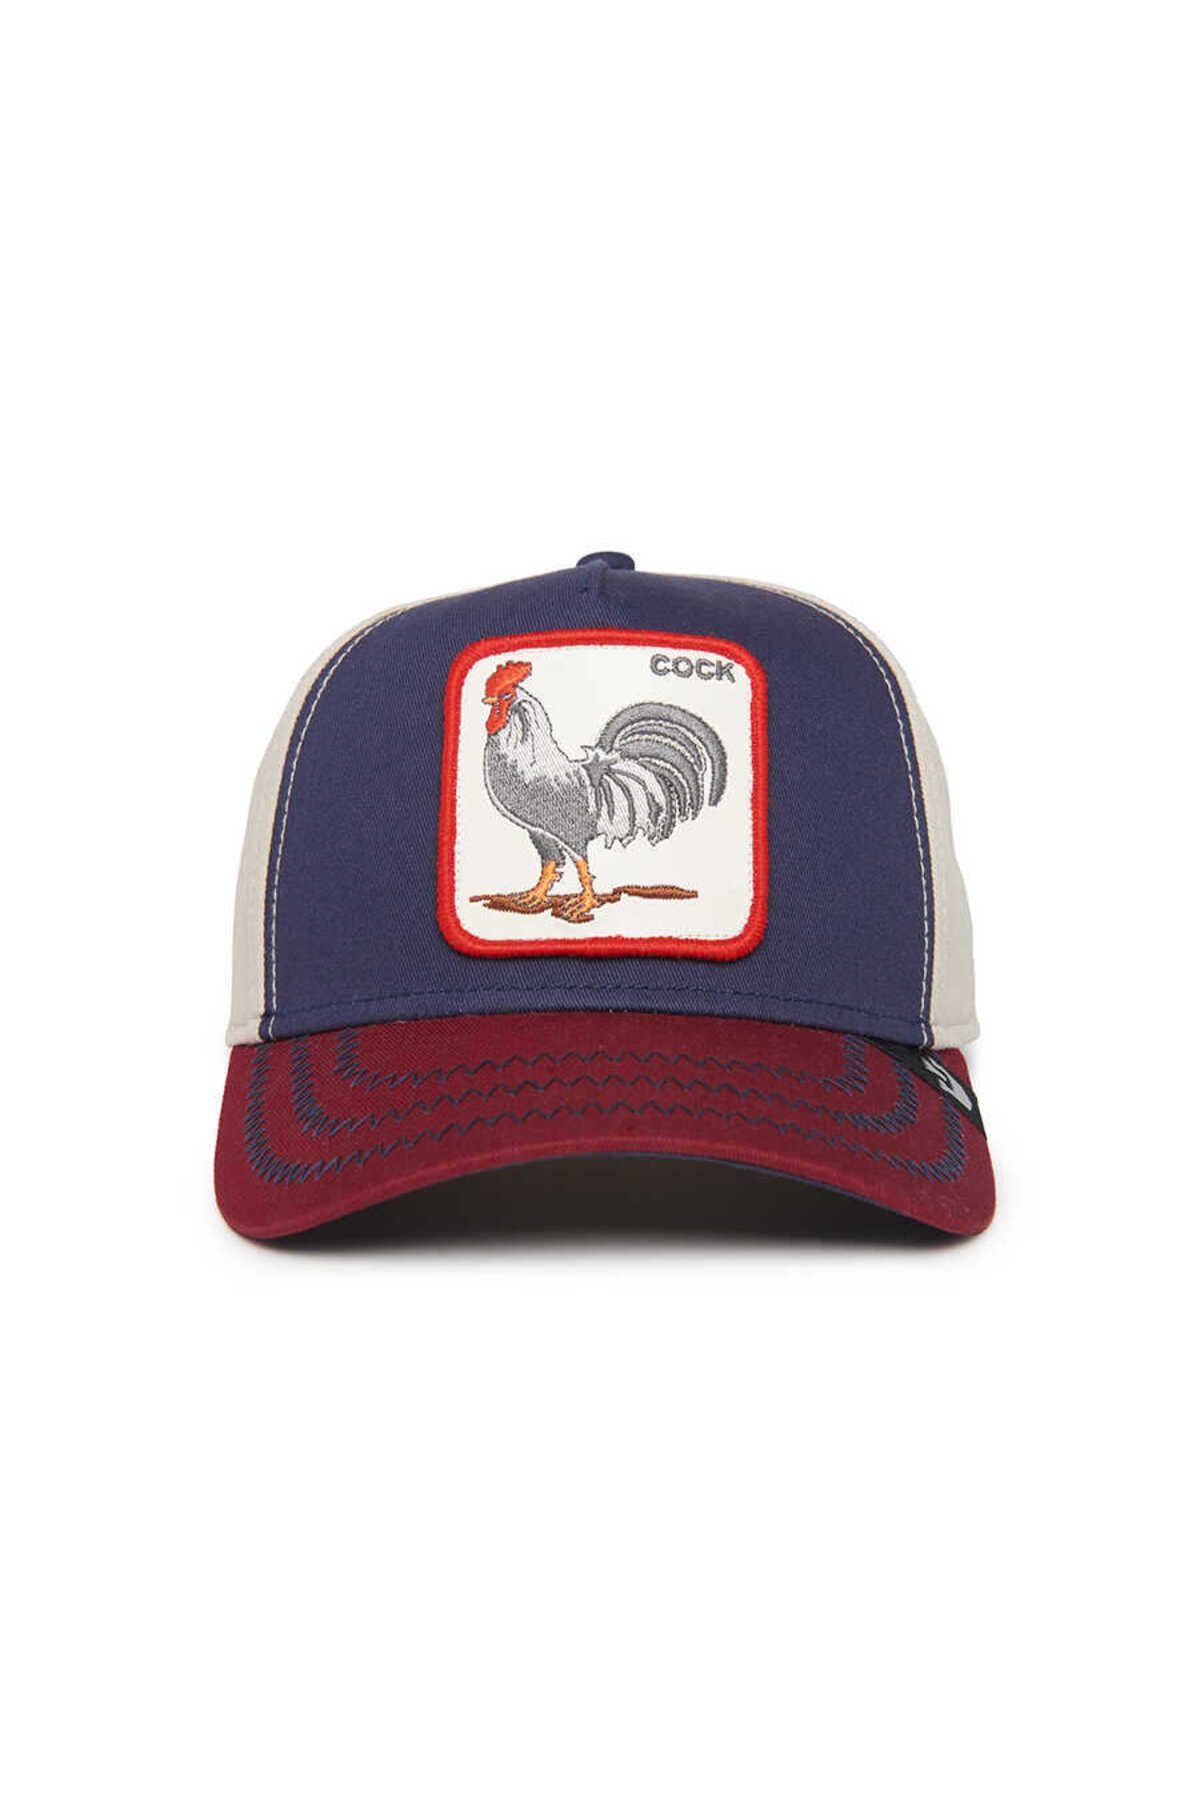 Goorin Bros . All American Rooster 100 ( Horoz Figürlü  ) Şapka 101-1109